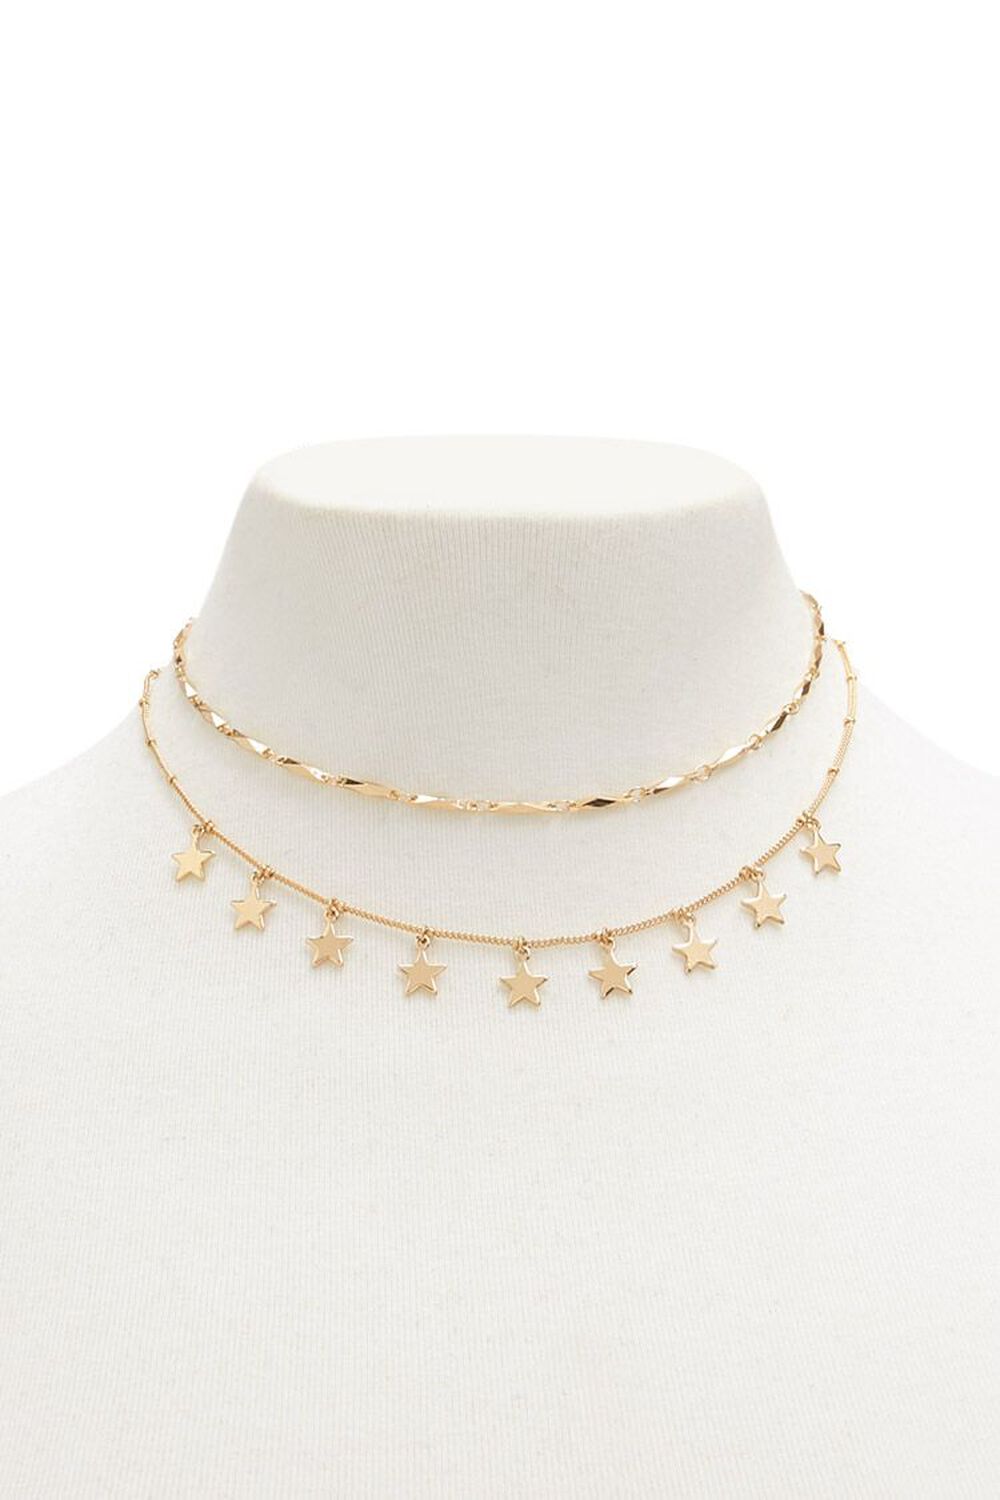 Louis Vuitton Monogram Charm Necklace  Rent Louis Vuitton jewelry for  $55/month